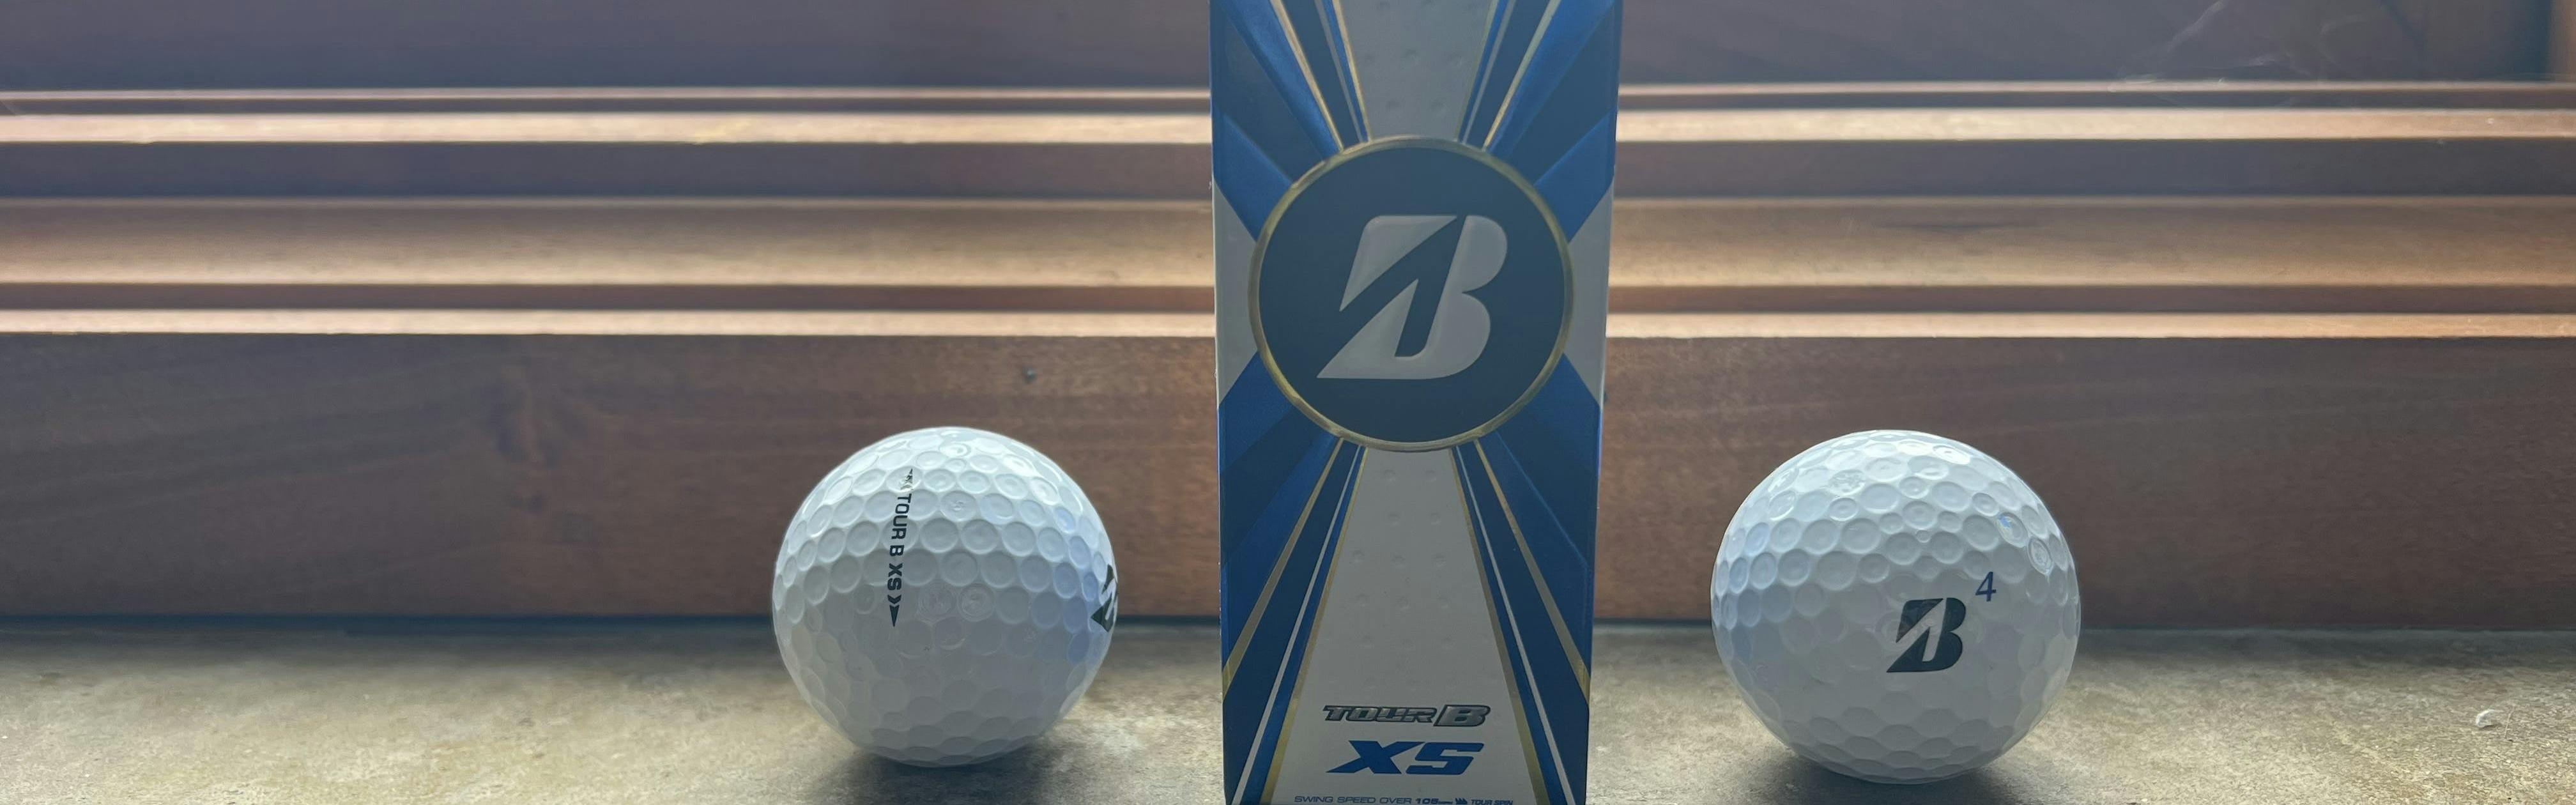 Expert Review: Bridgestone Golf Tour B XS Golf Balls | Curated.com